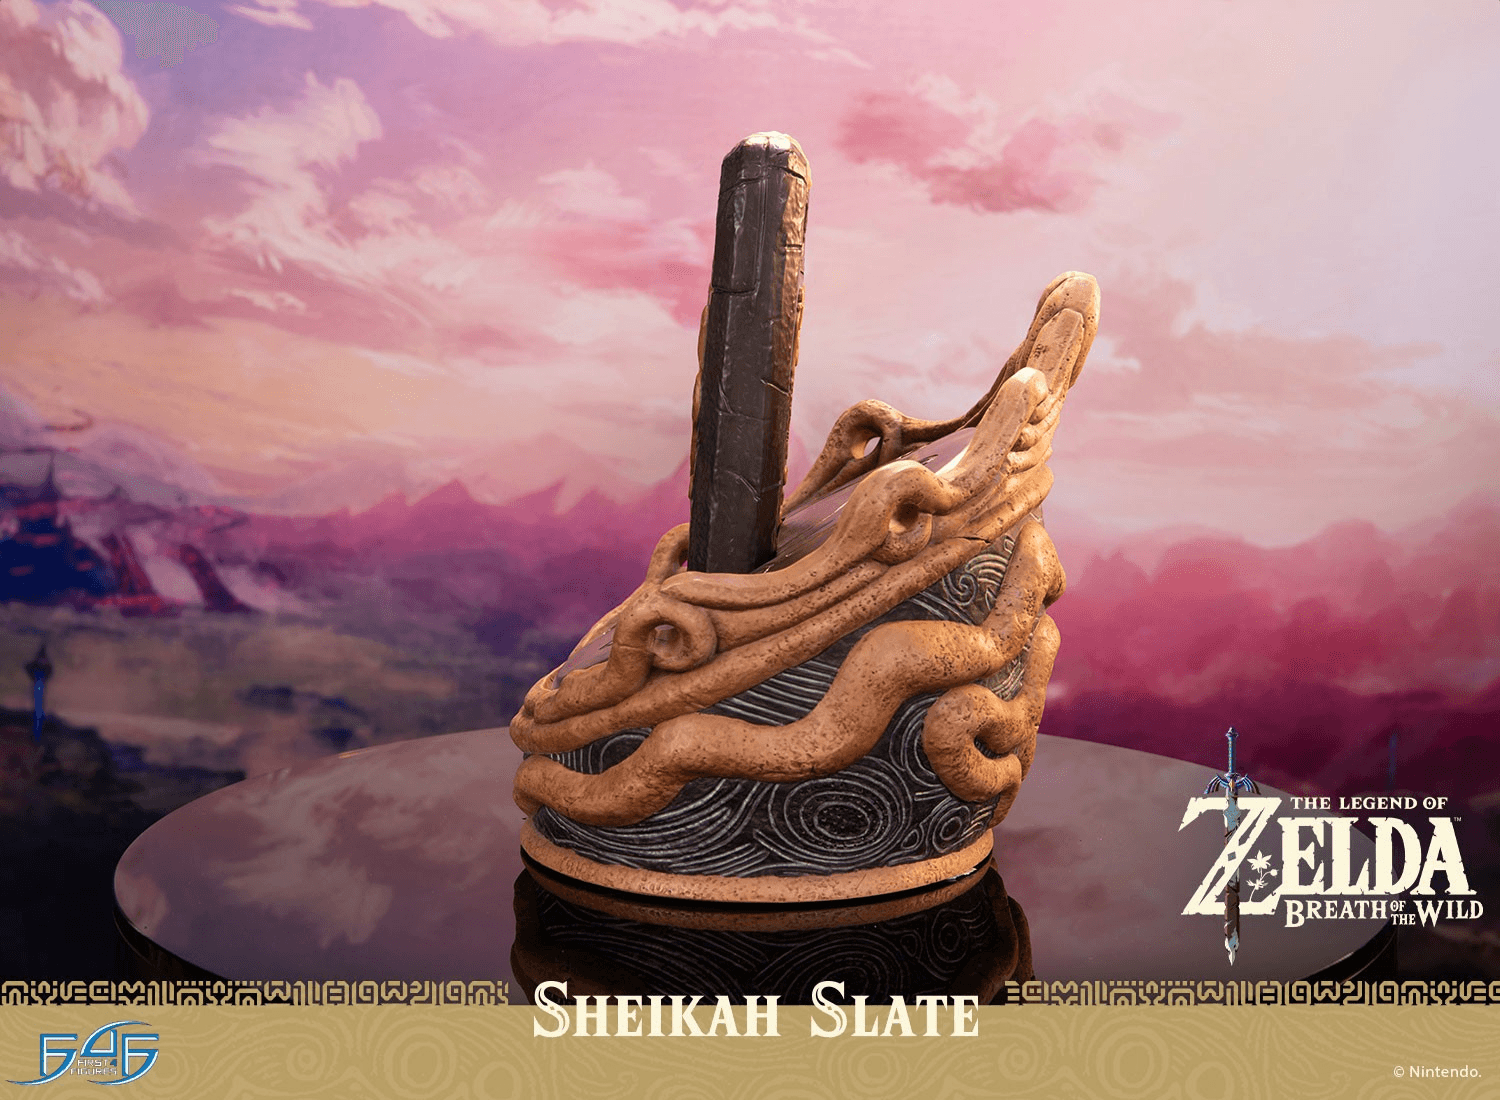 The Legend of Zelda: Breath of the Wild - Skeikah Slate Statue